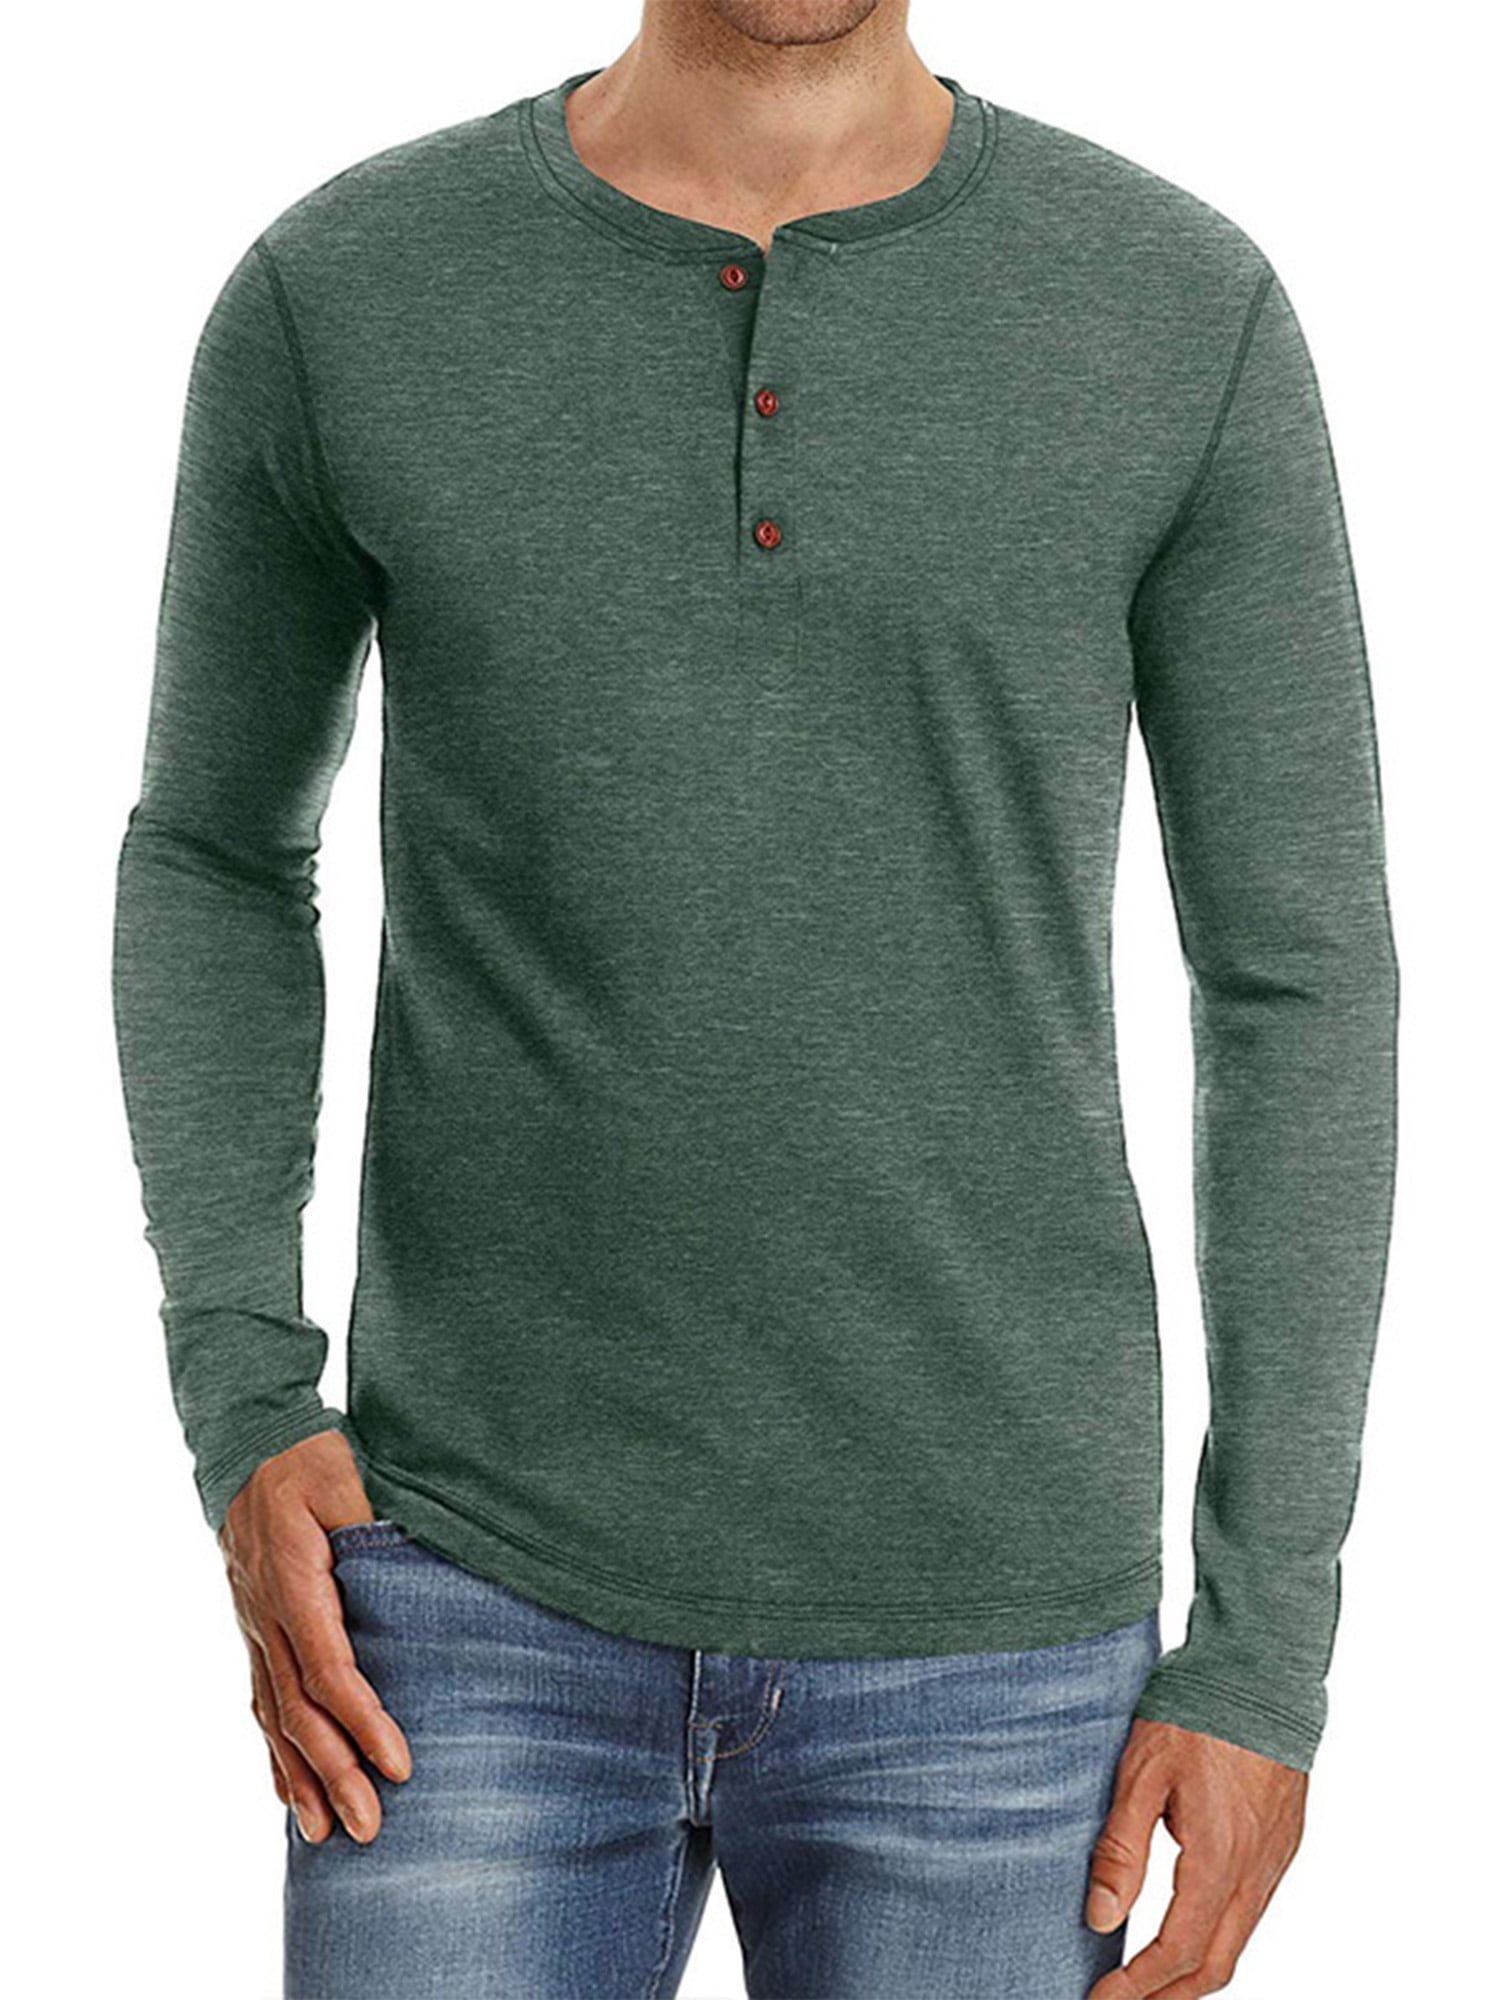 Venado Henley Long Sleeve Shirts for Men Mens Henley with Flex Material